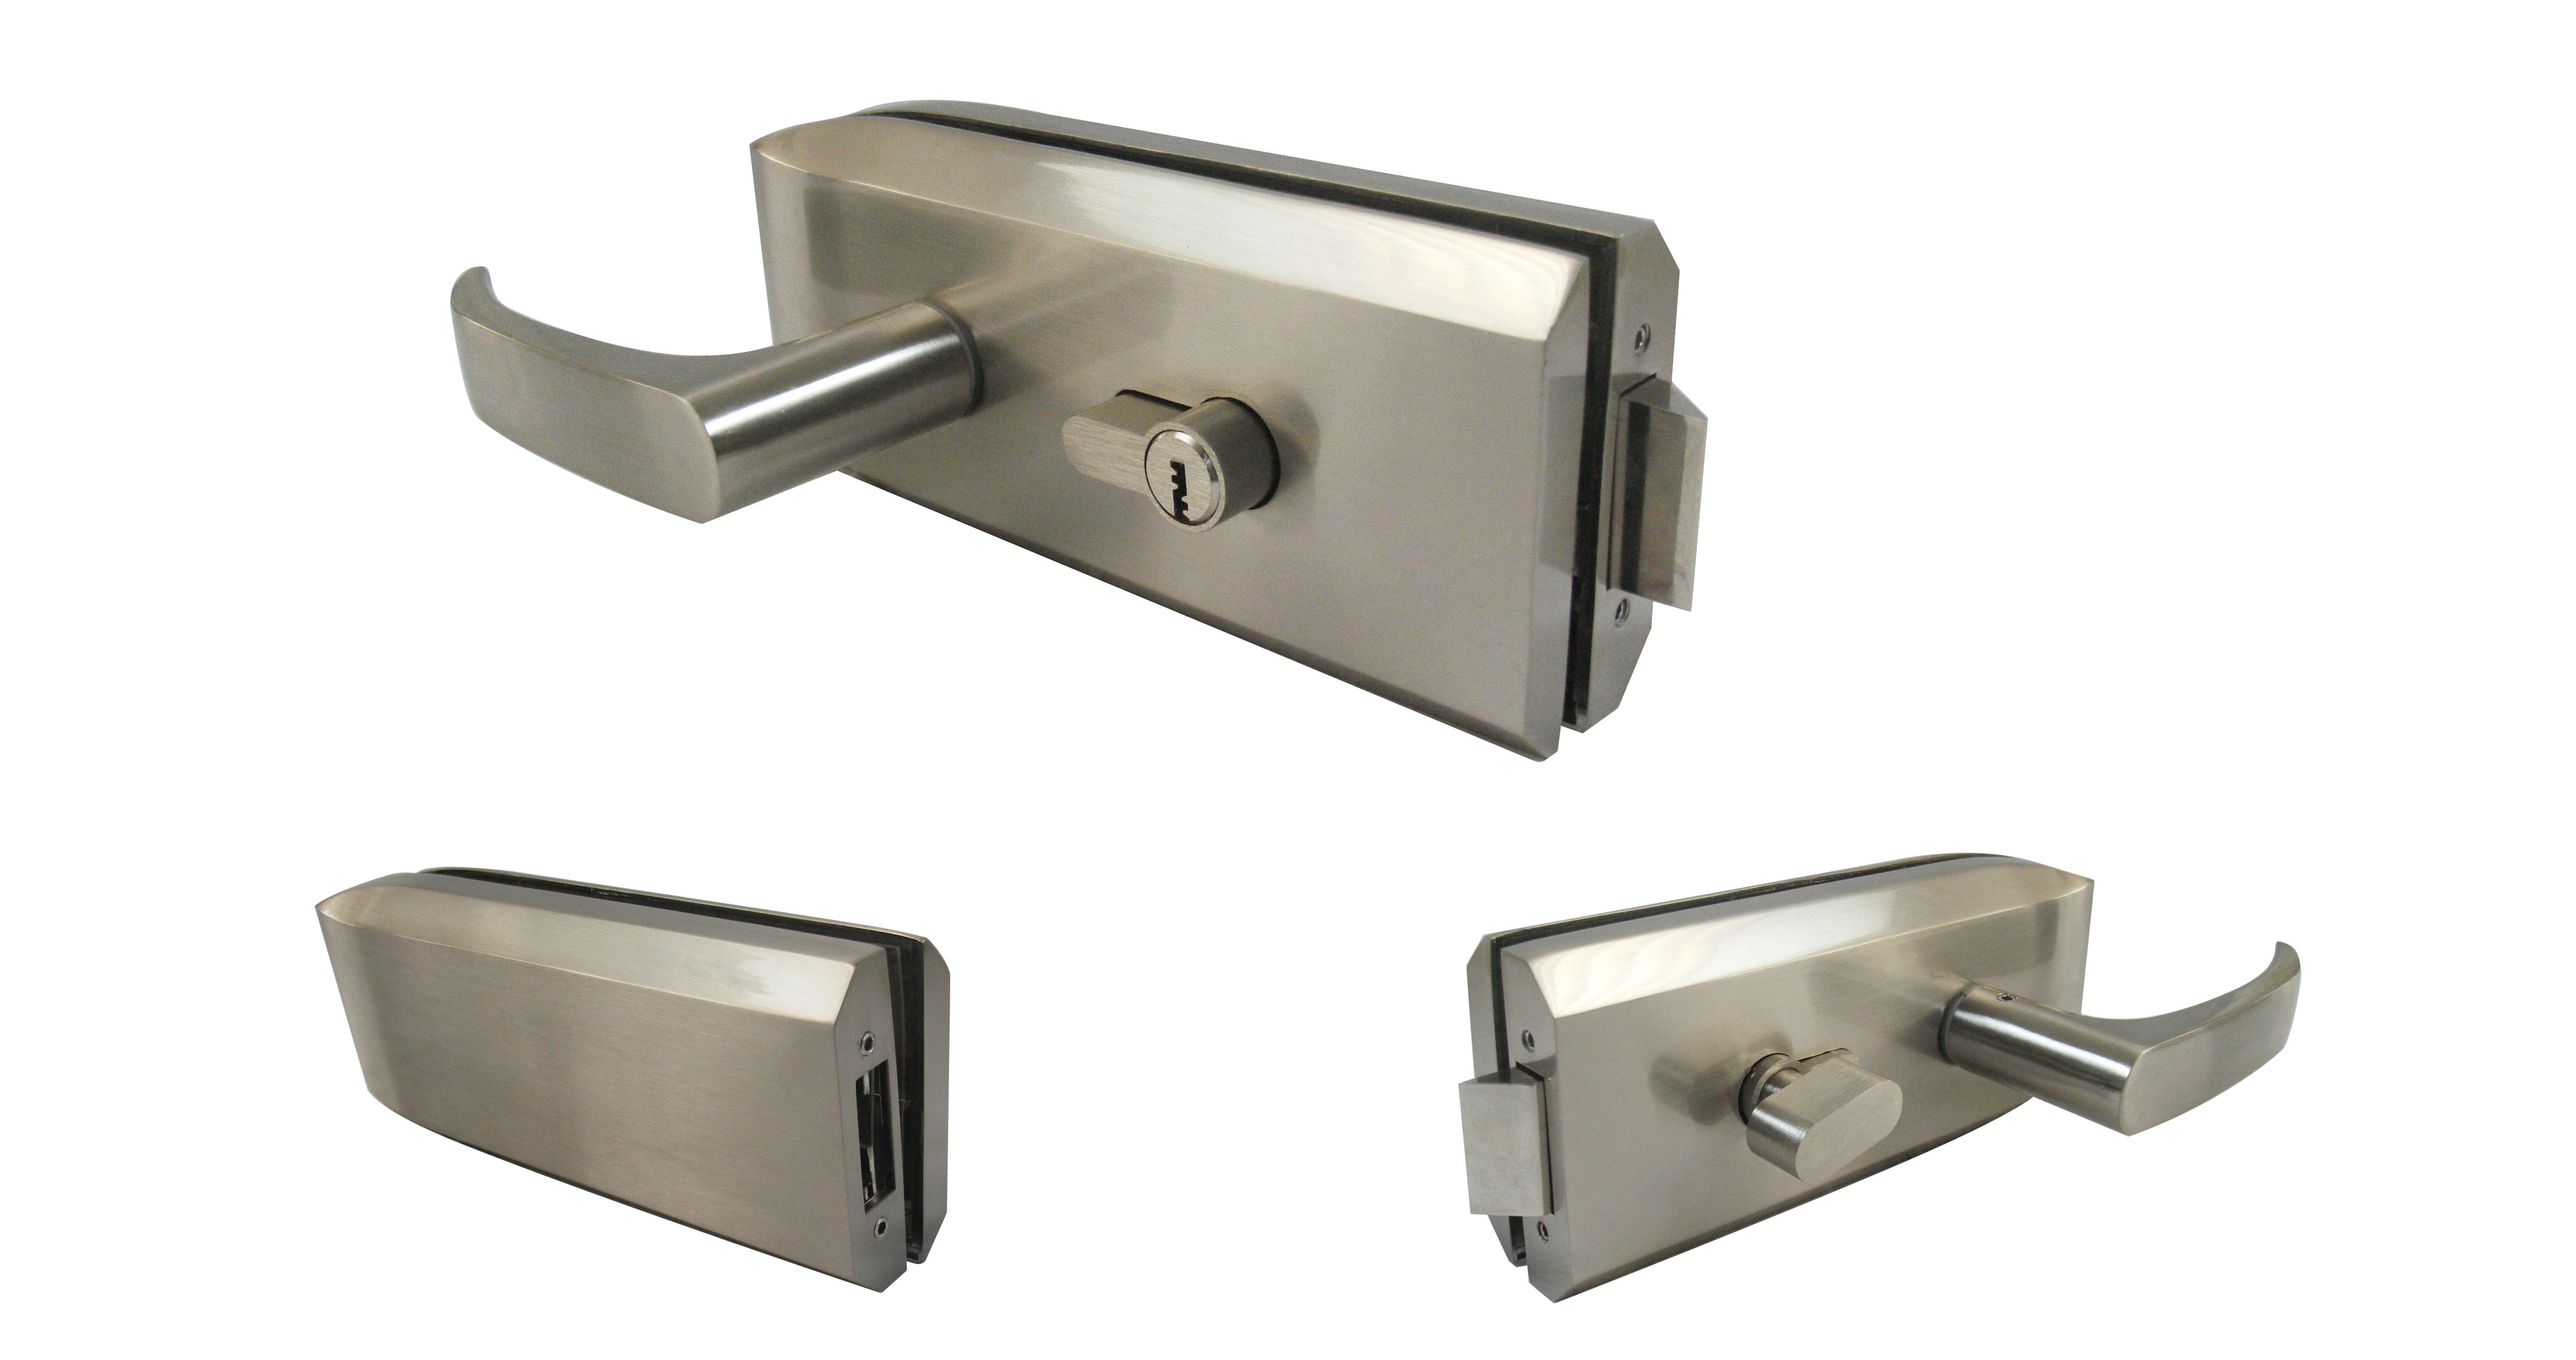 Glass Door Knobs With Locks Door Locks And Knobs intended for measurements 5102 X 2693